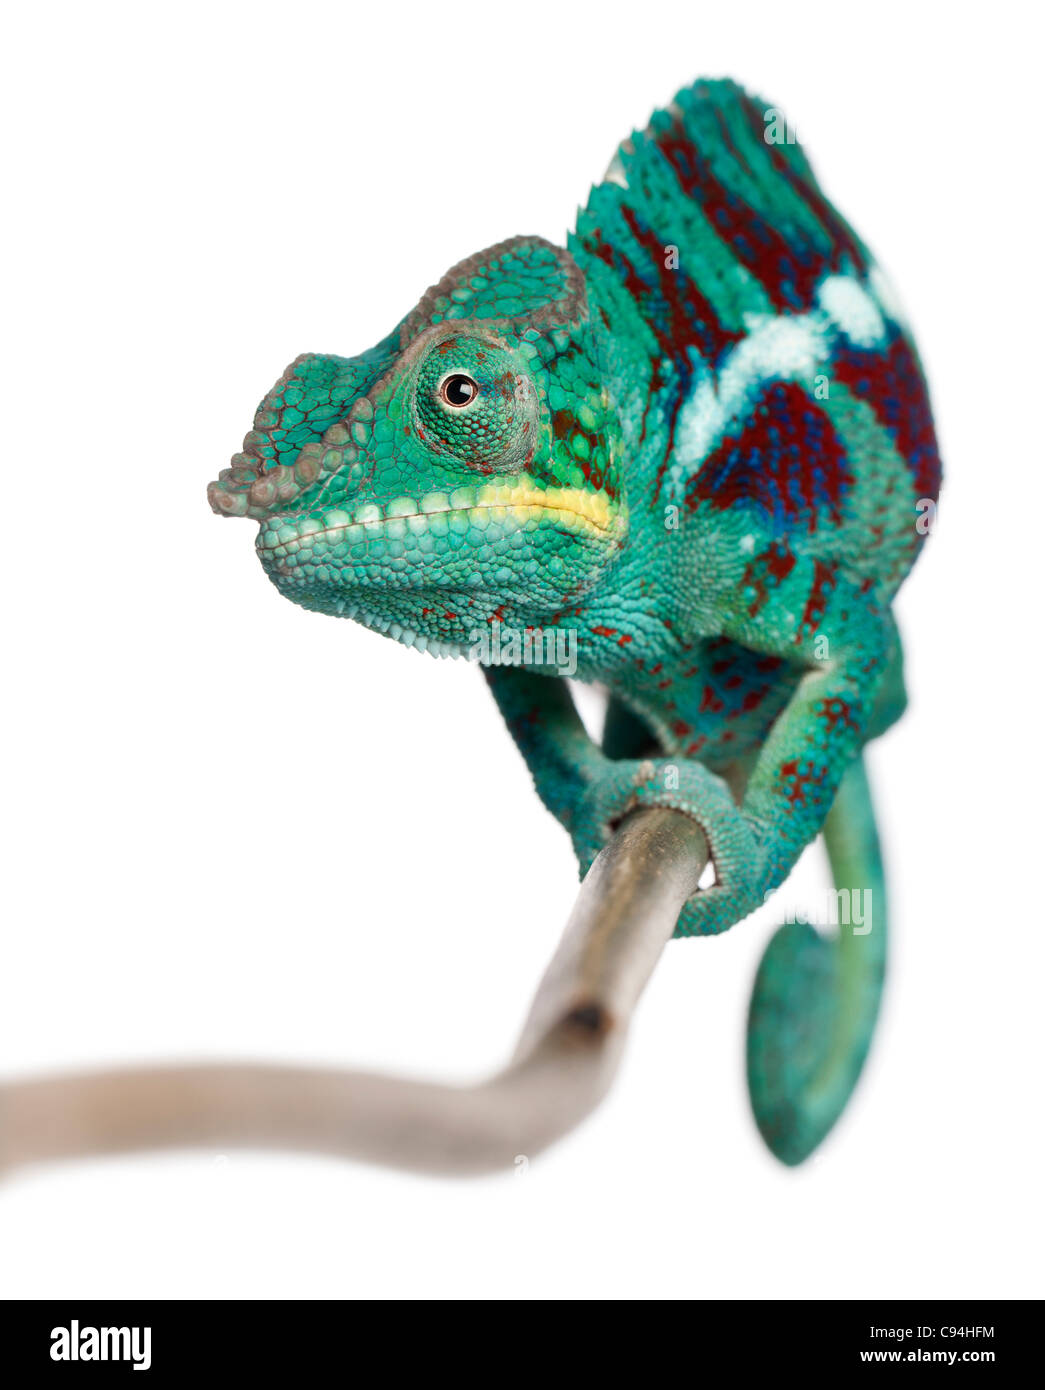 Panther Chameleon Nosy Be, Furcifer pardalis, di fronte a uno sfondo bianco Foto Stock